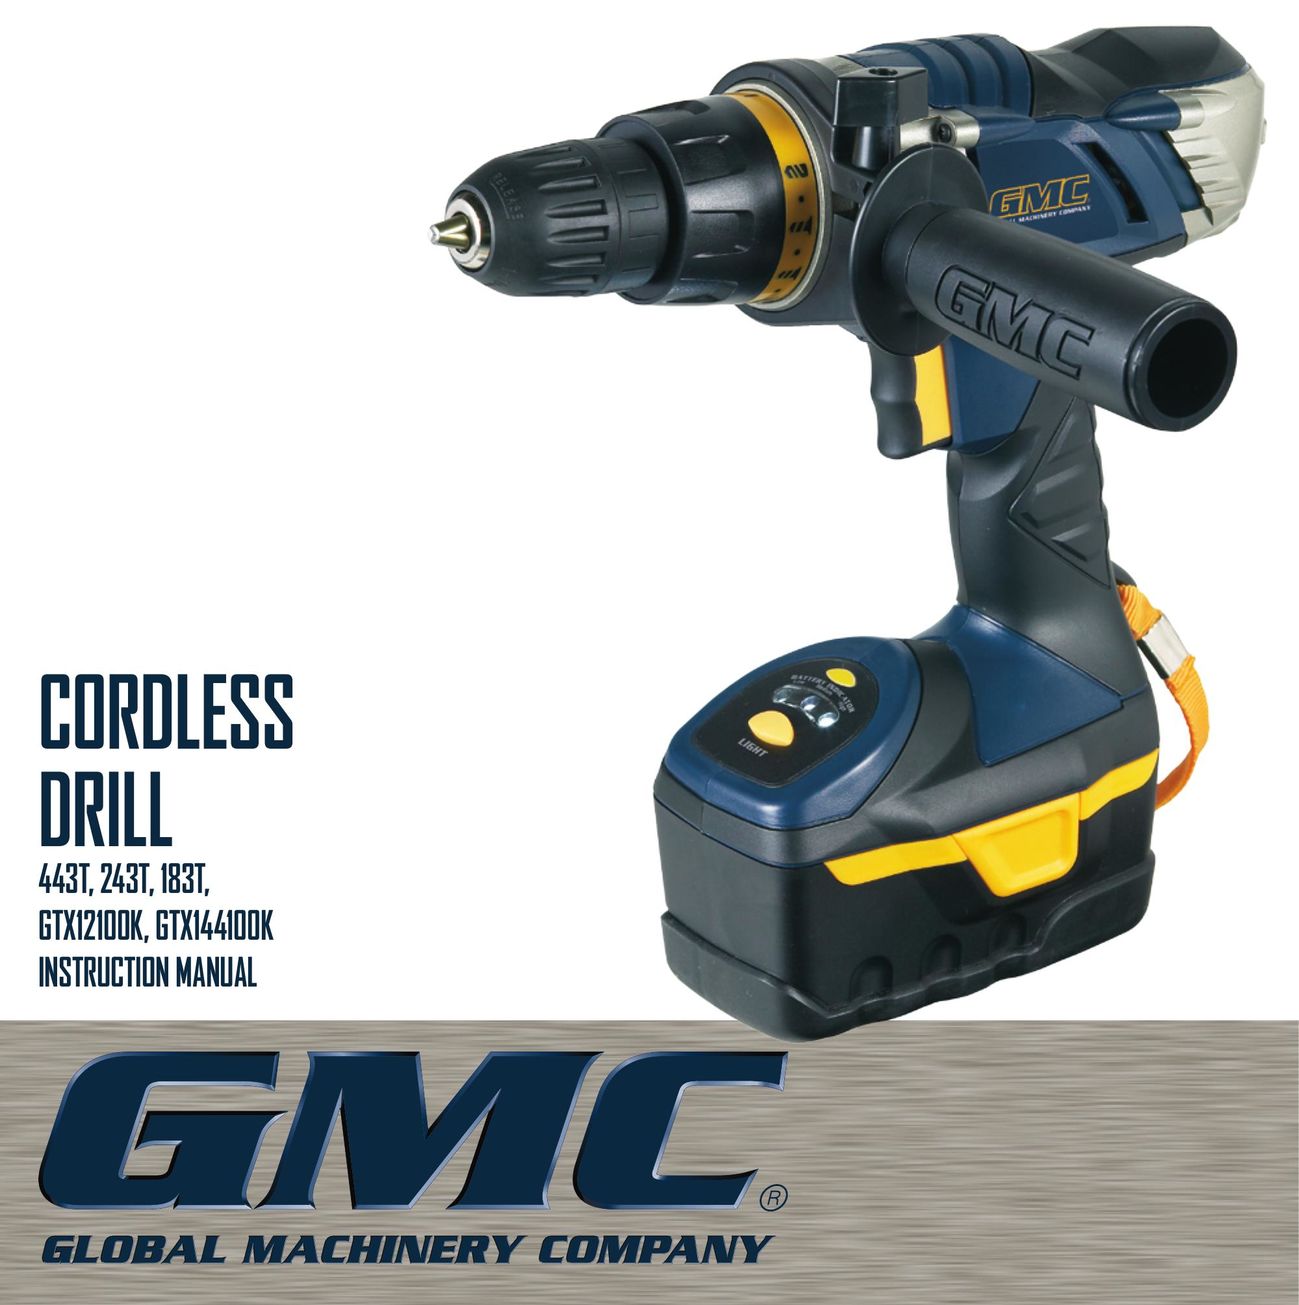 Global Machinery Company 243T Drill User Manual